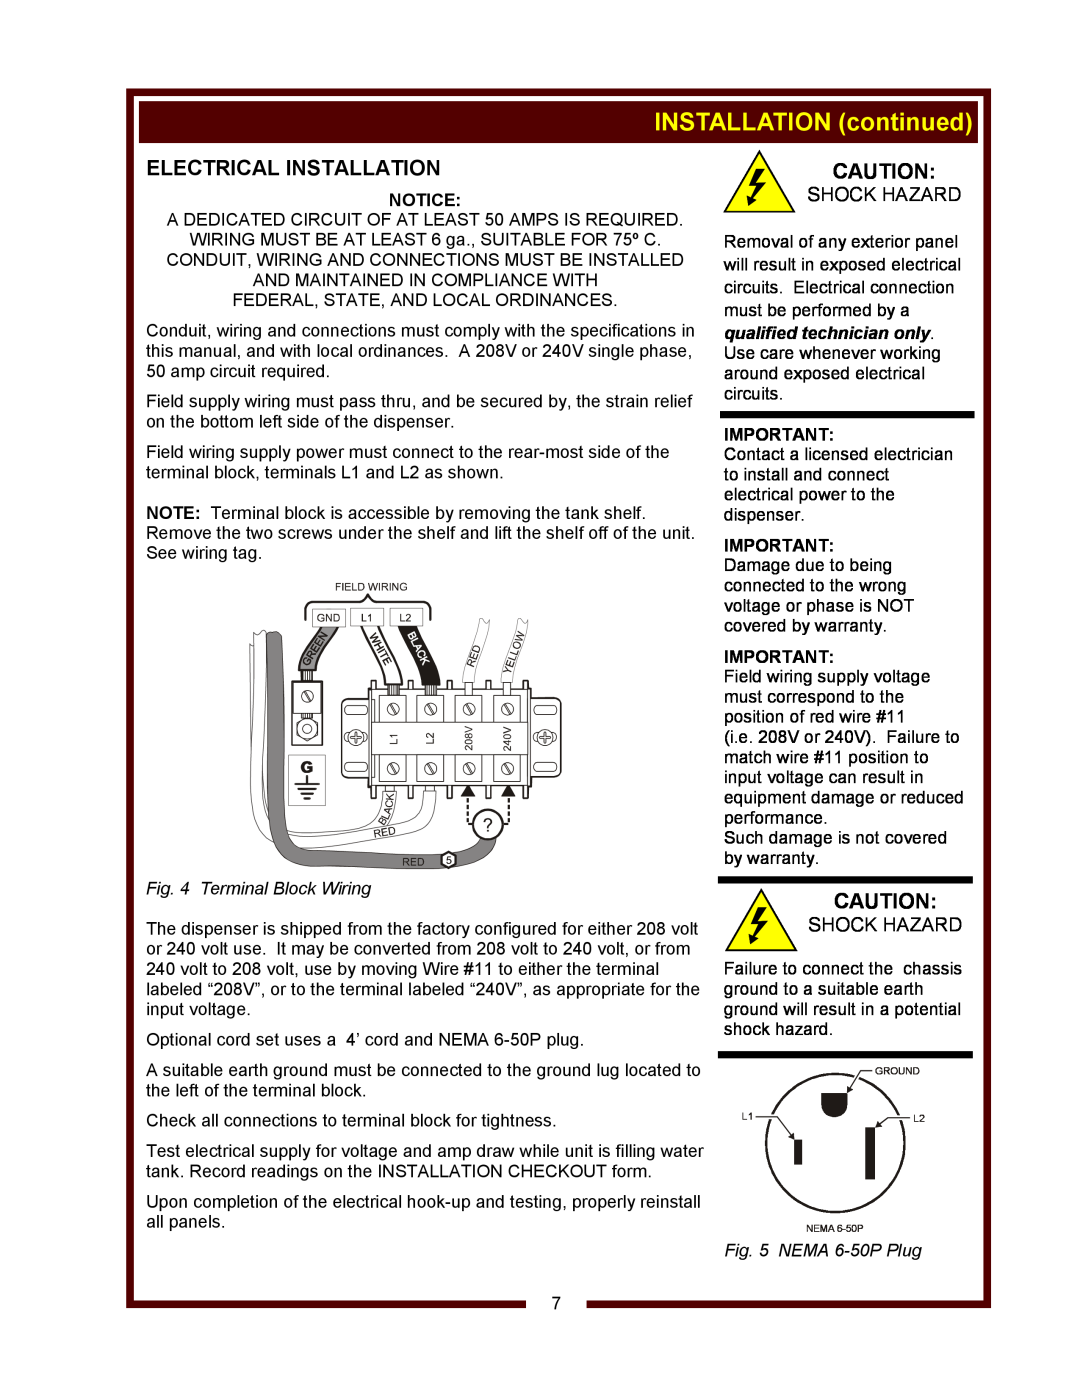 Wells WM-TR operation manual Electrical Installation, INSTALLATION continued, Terminal Block Wiring, NEMA 6-50P Plug 